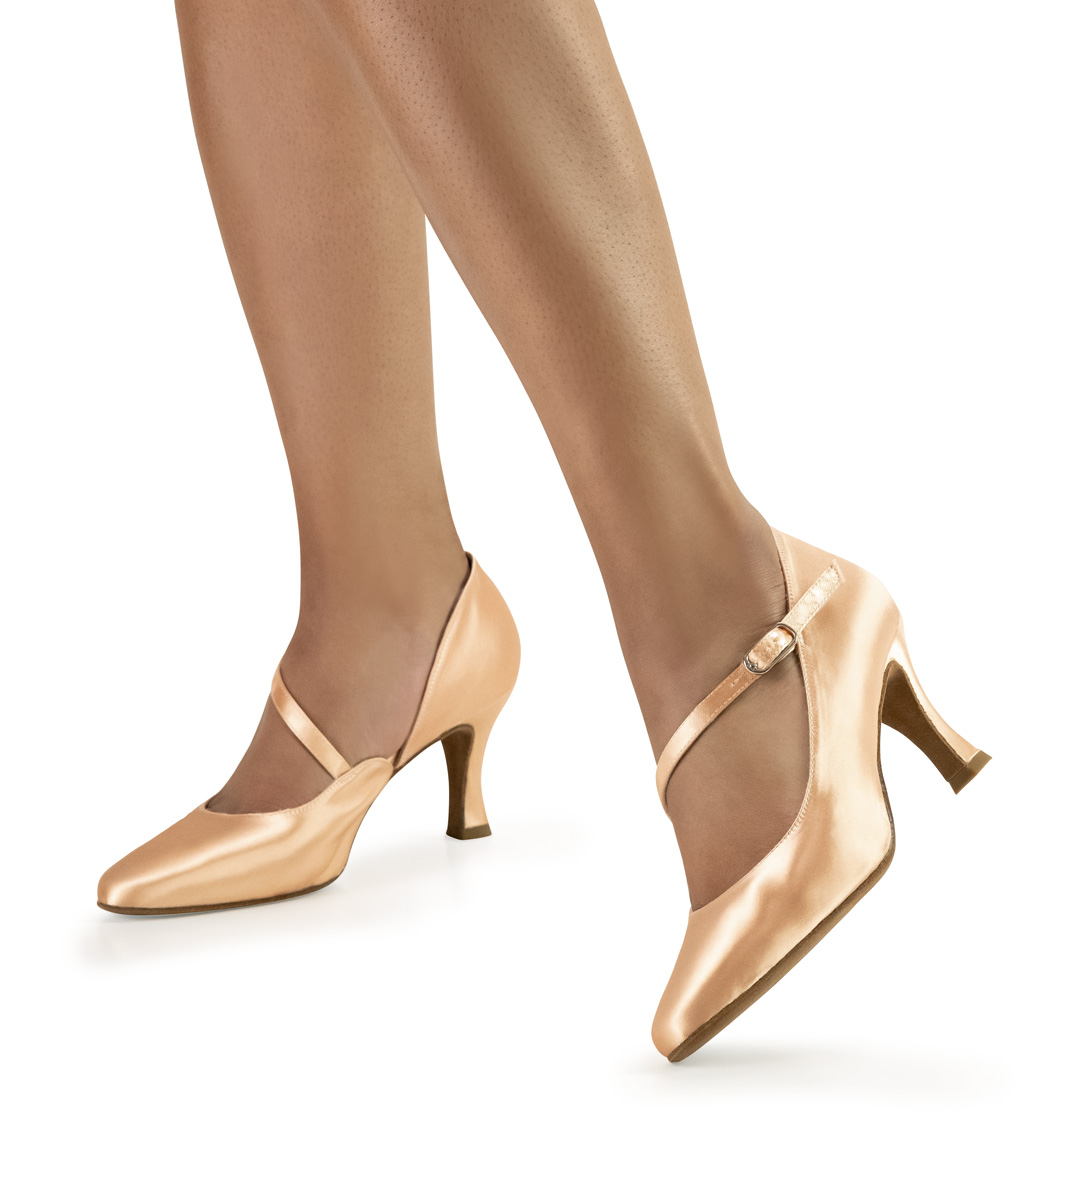 Standard Werner Kern ladies' dance shoe with 6.5 cm heel height